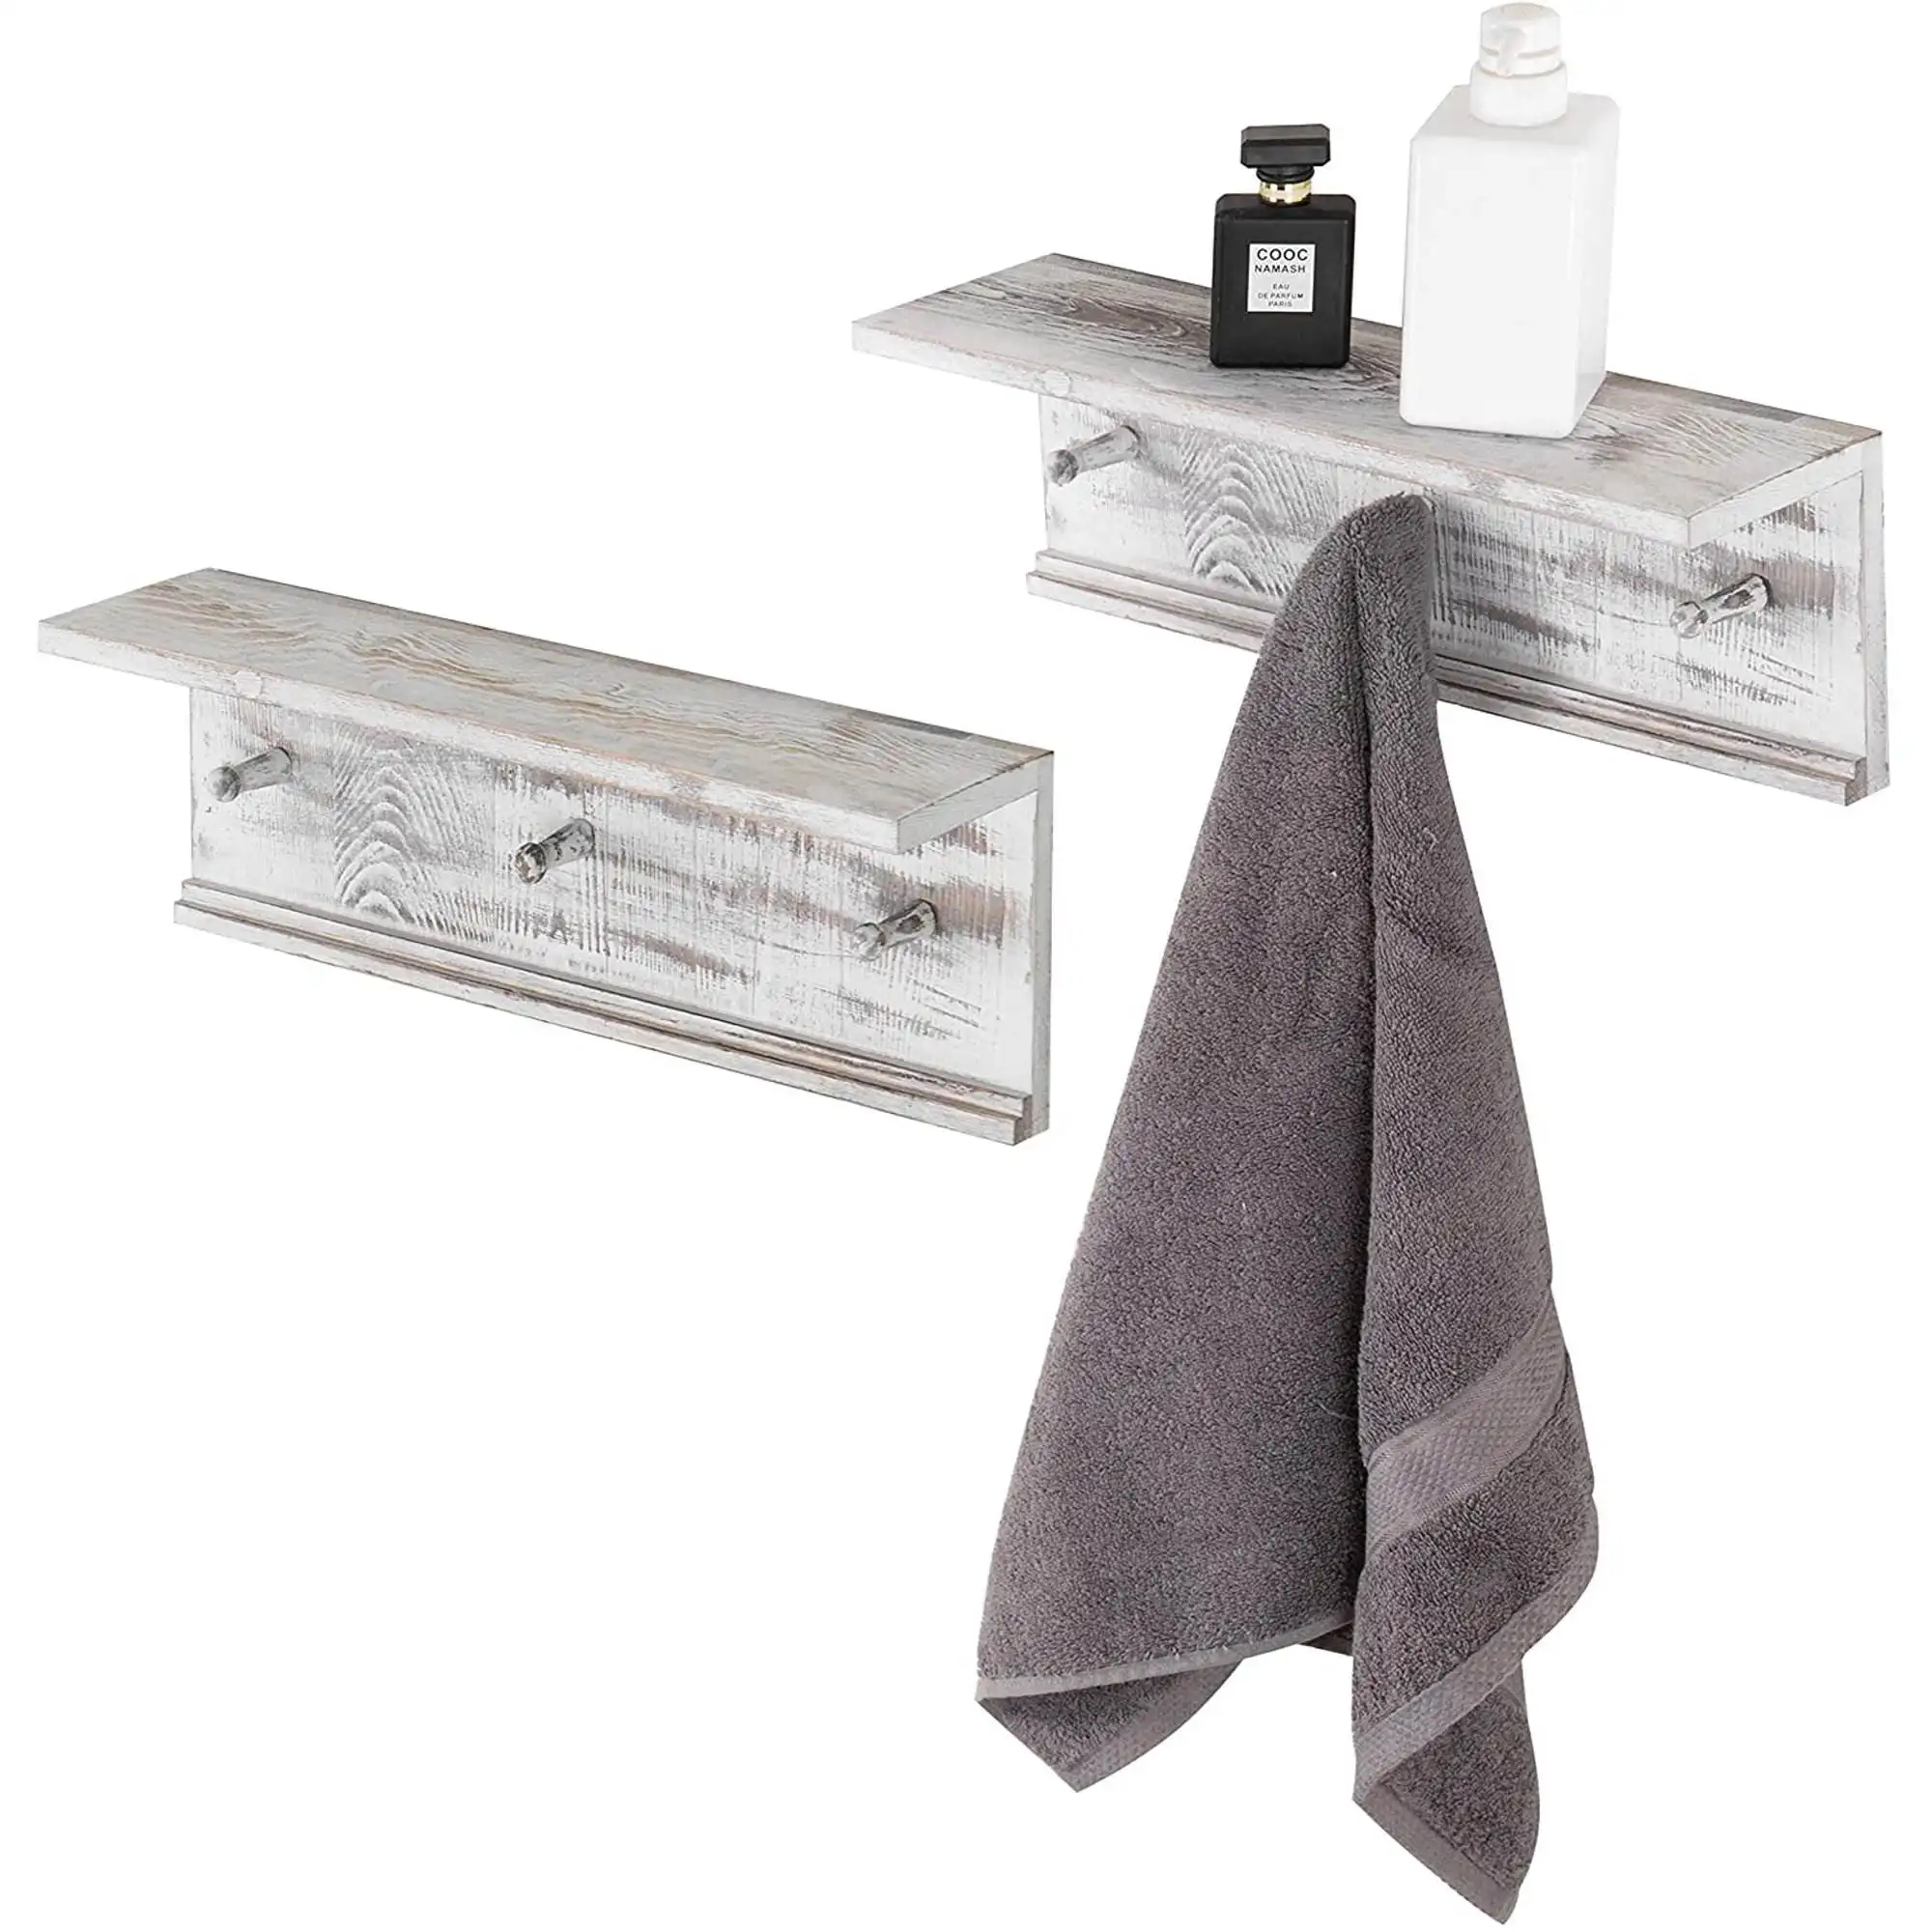 Bathroom wall mounted organizer shelf with towel hooks multi-functional wooden shelf